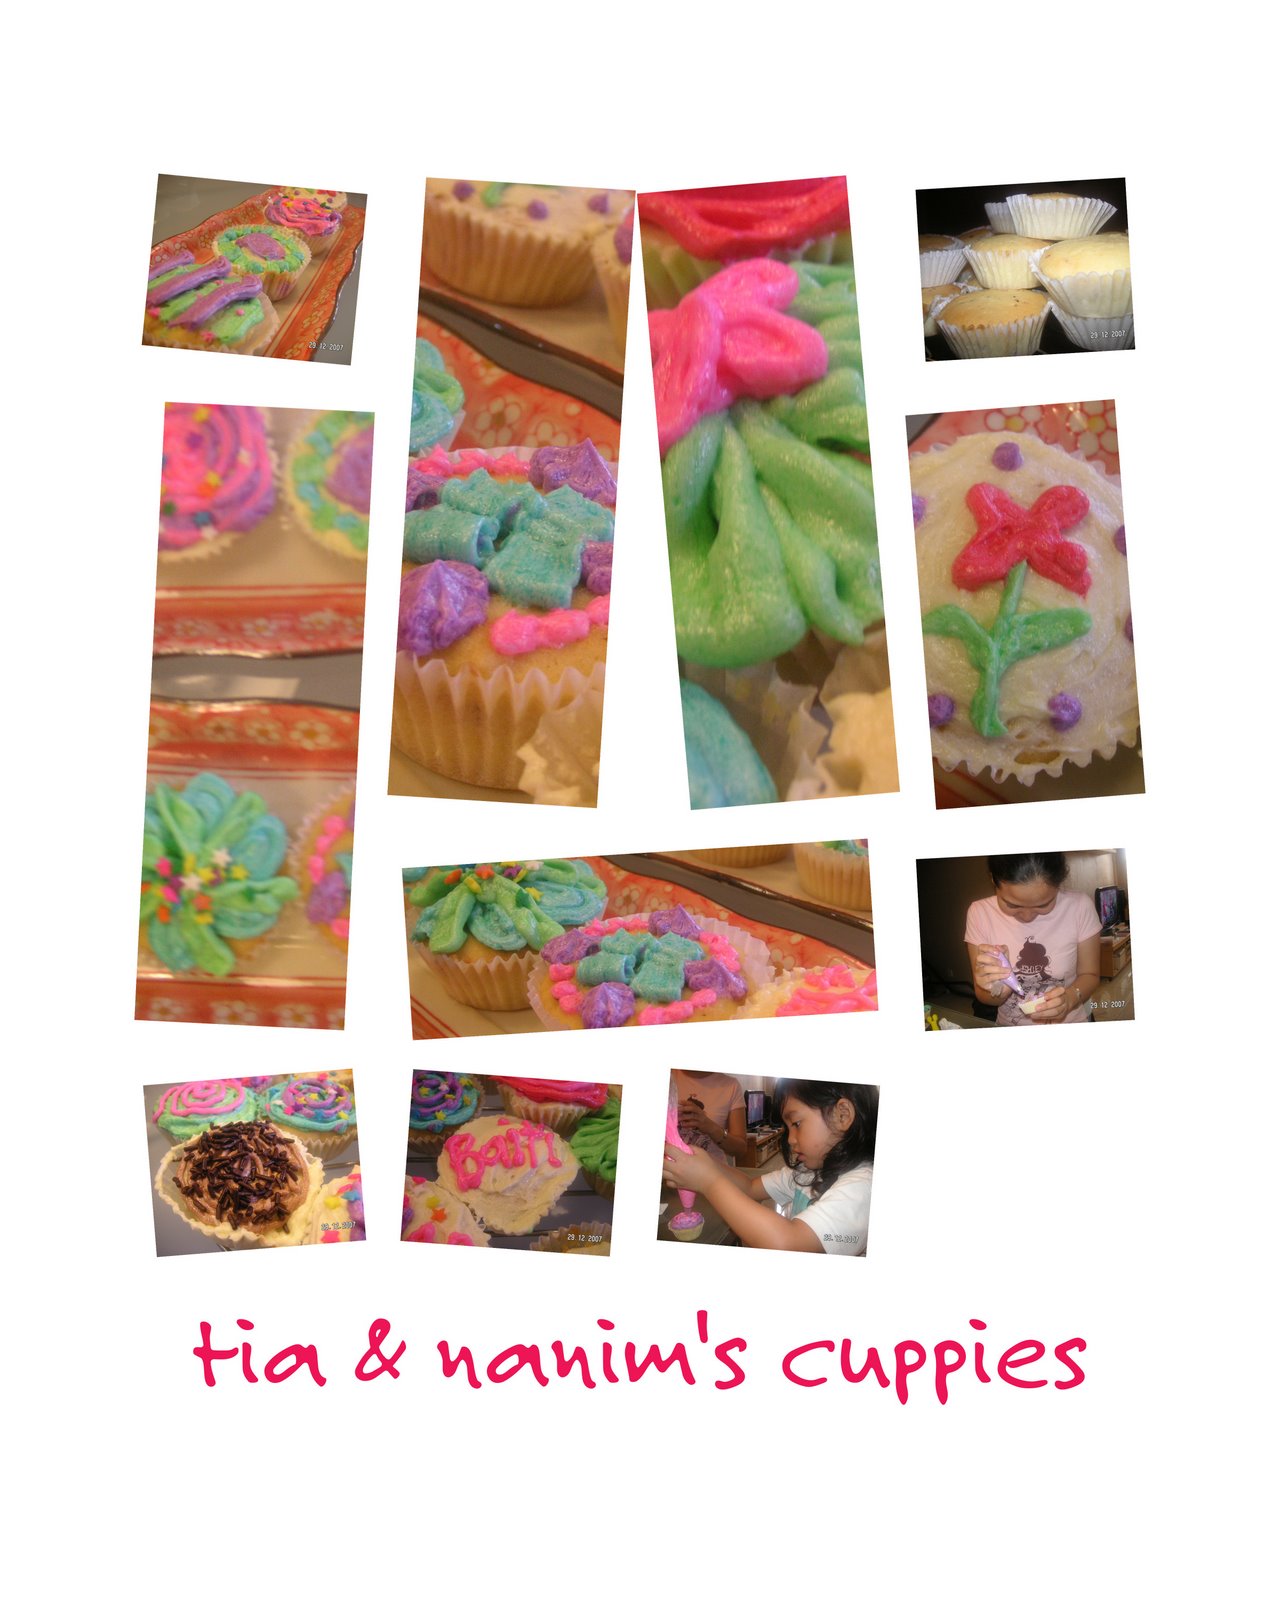 [Tia+&+nanim's+cuppies.jpg]